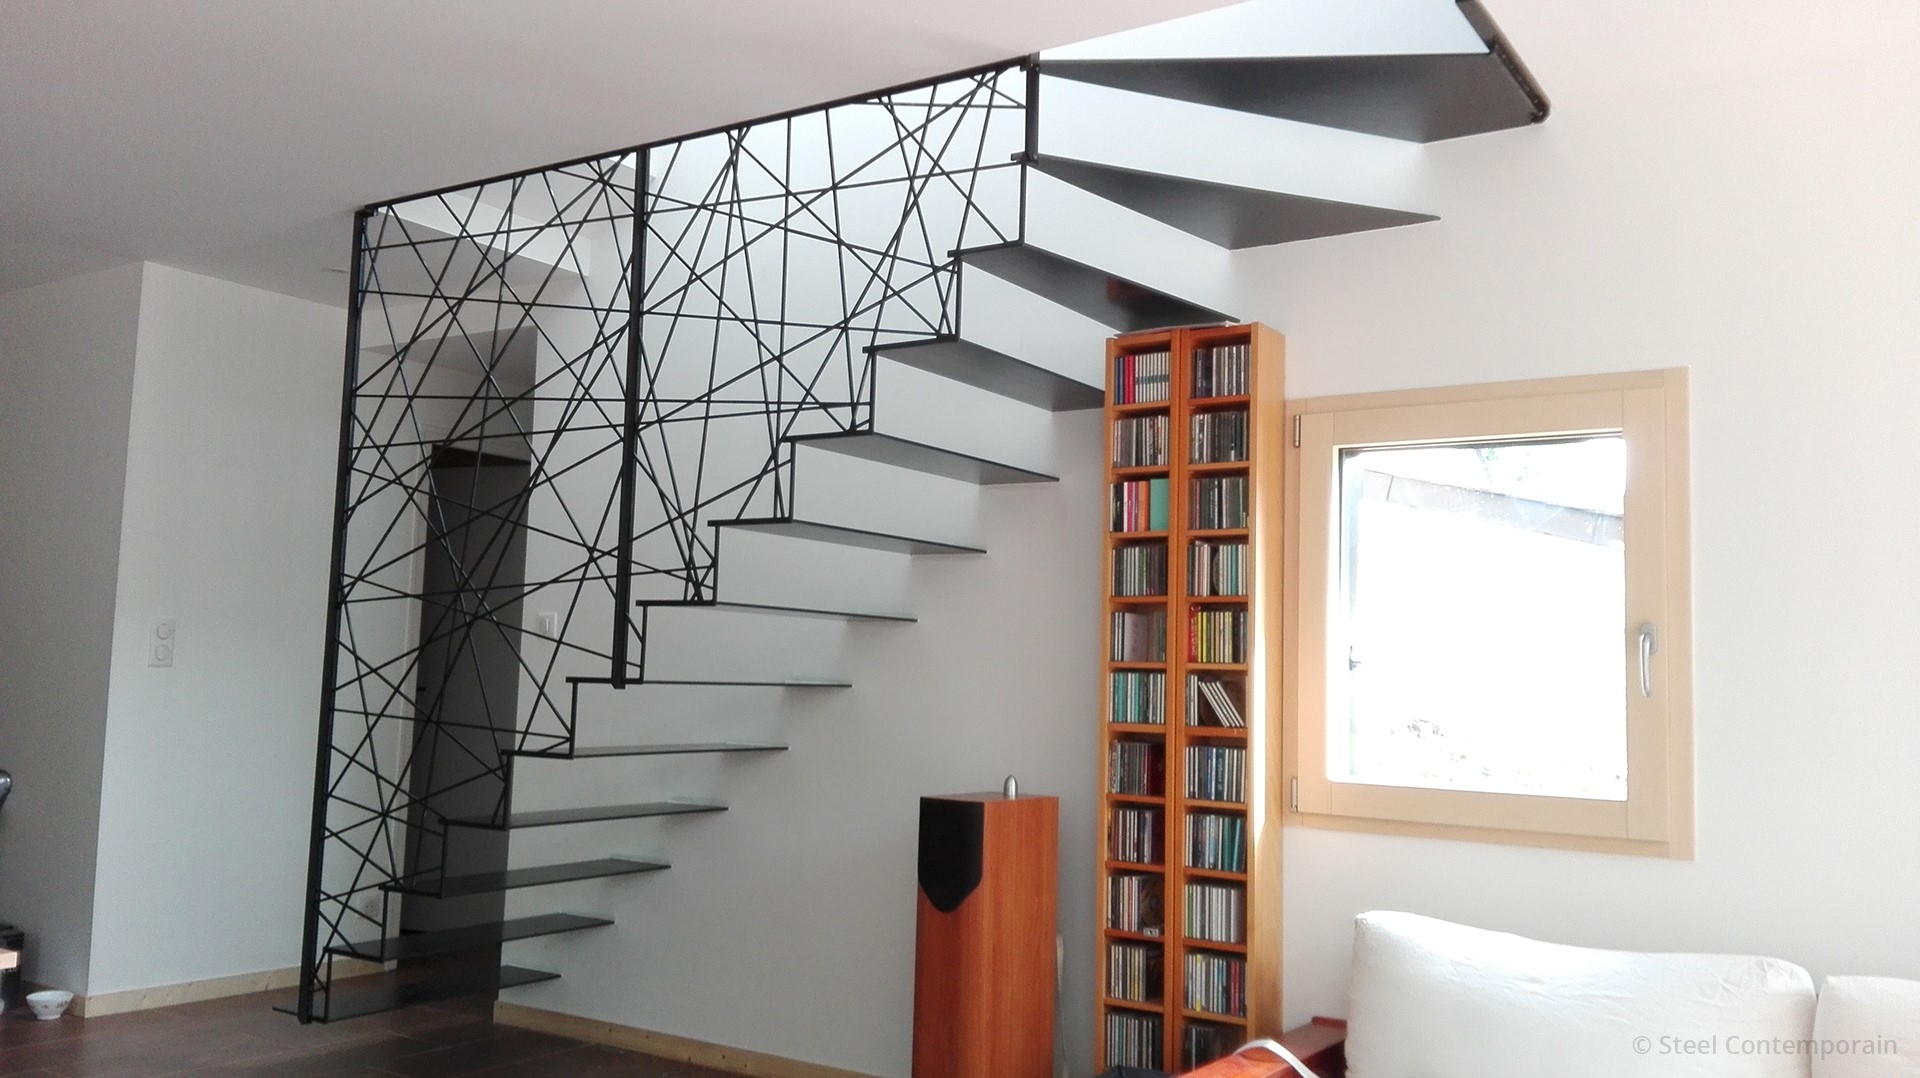 Escalier design suspendu, escalier metal design suspendu, escalier metal suspendu, Savenay, steel contemporain